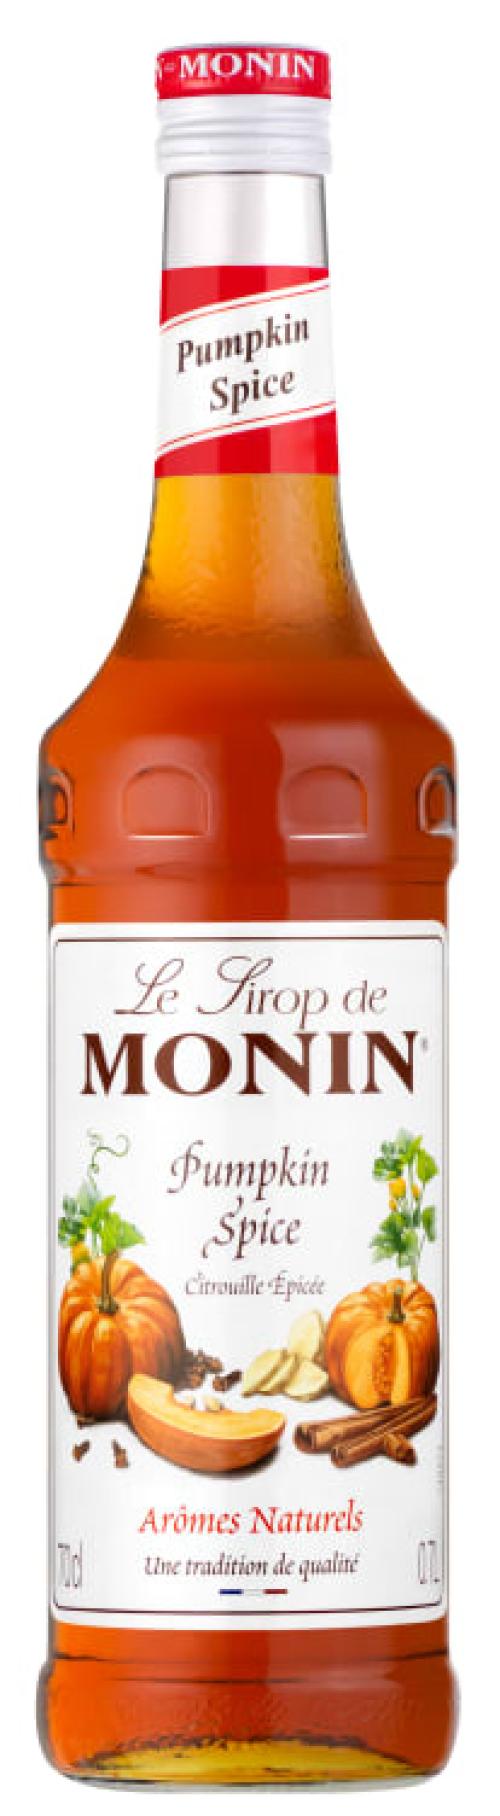 Monin, pumpkin spice